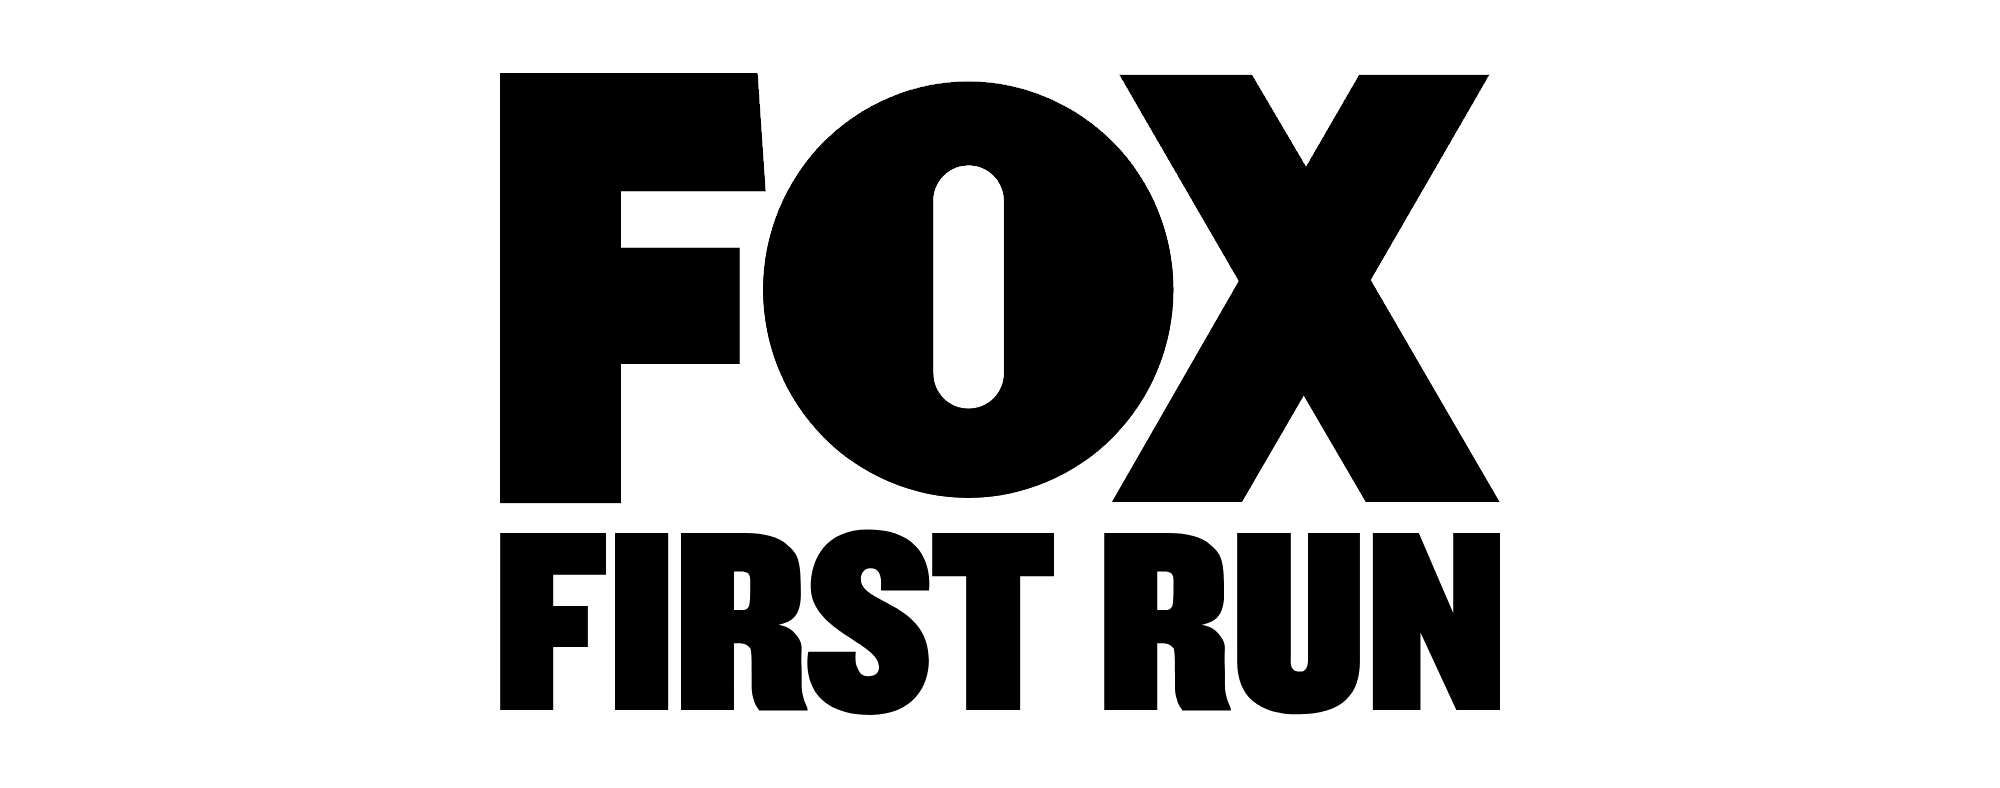 Fox First Run